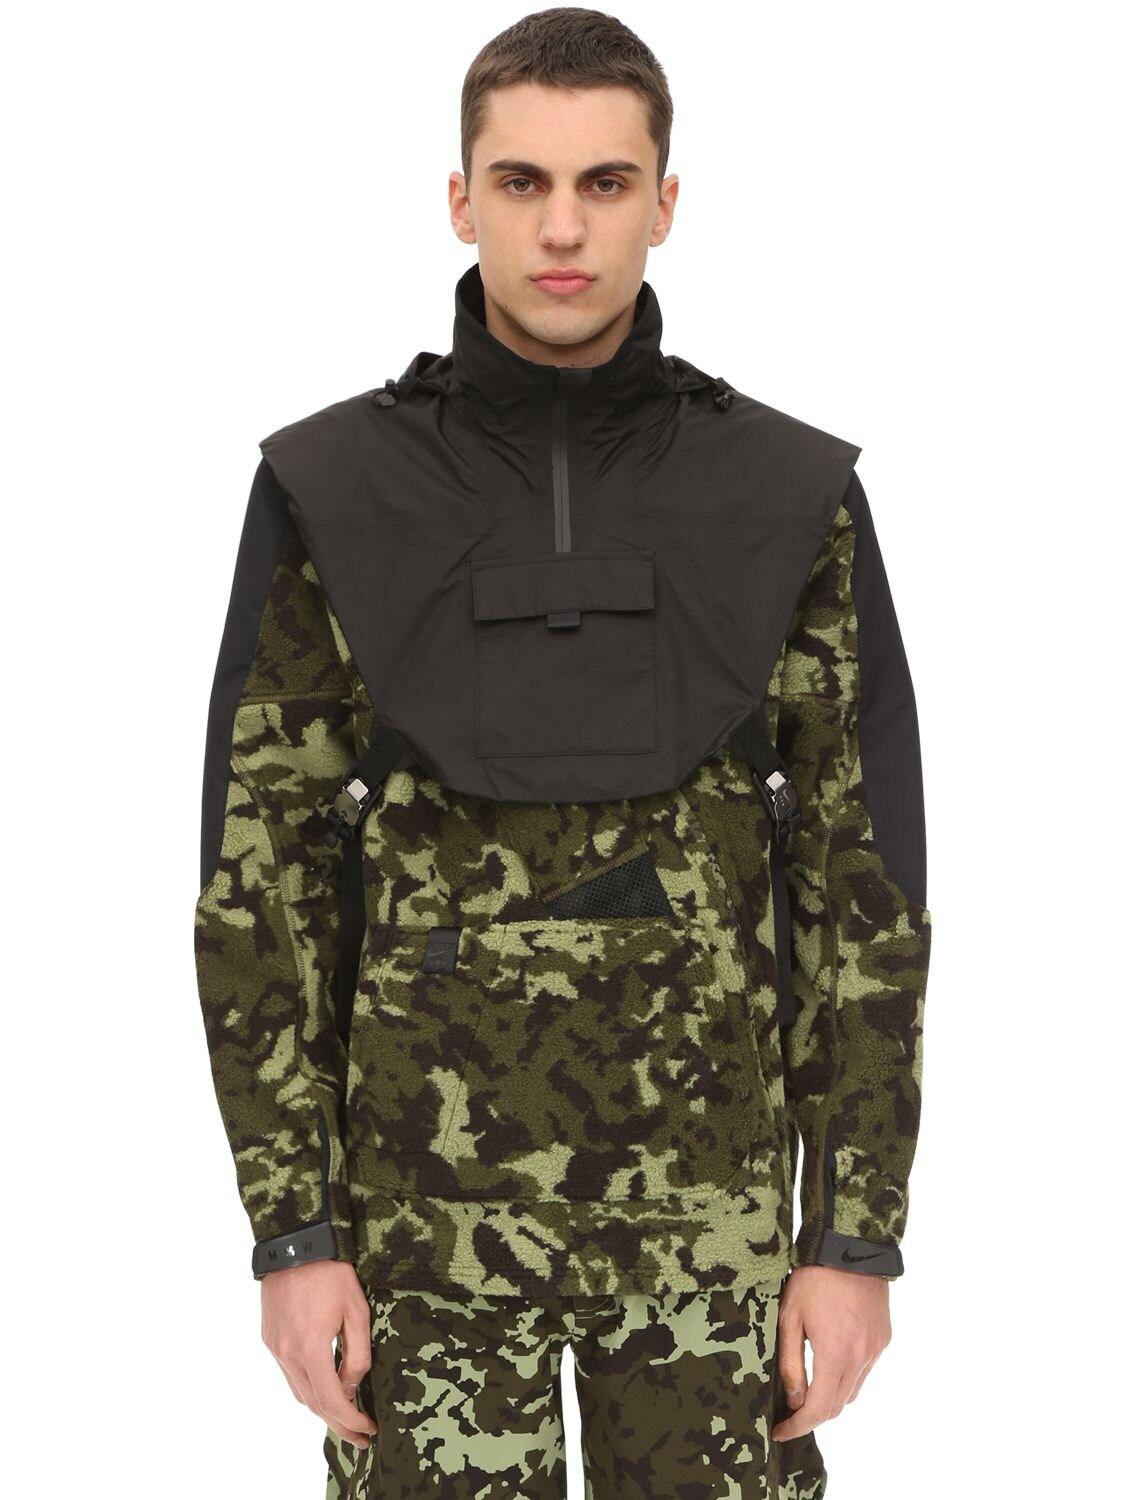 Nike X Mmw Mens Hooded Fleece Jacket in Black for Men - Save 69% - Lyst